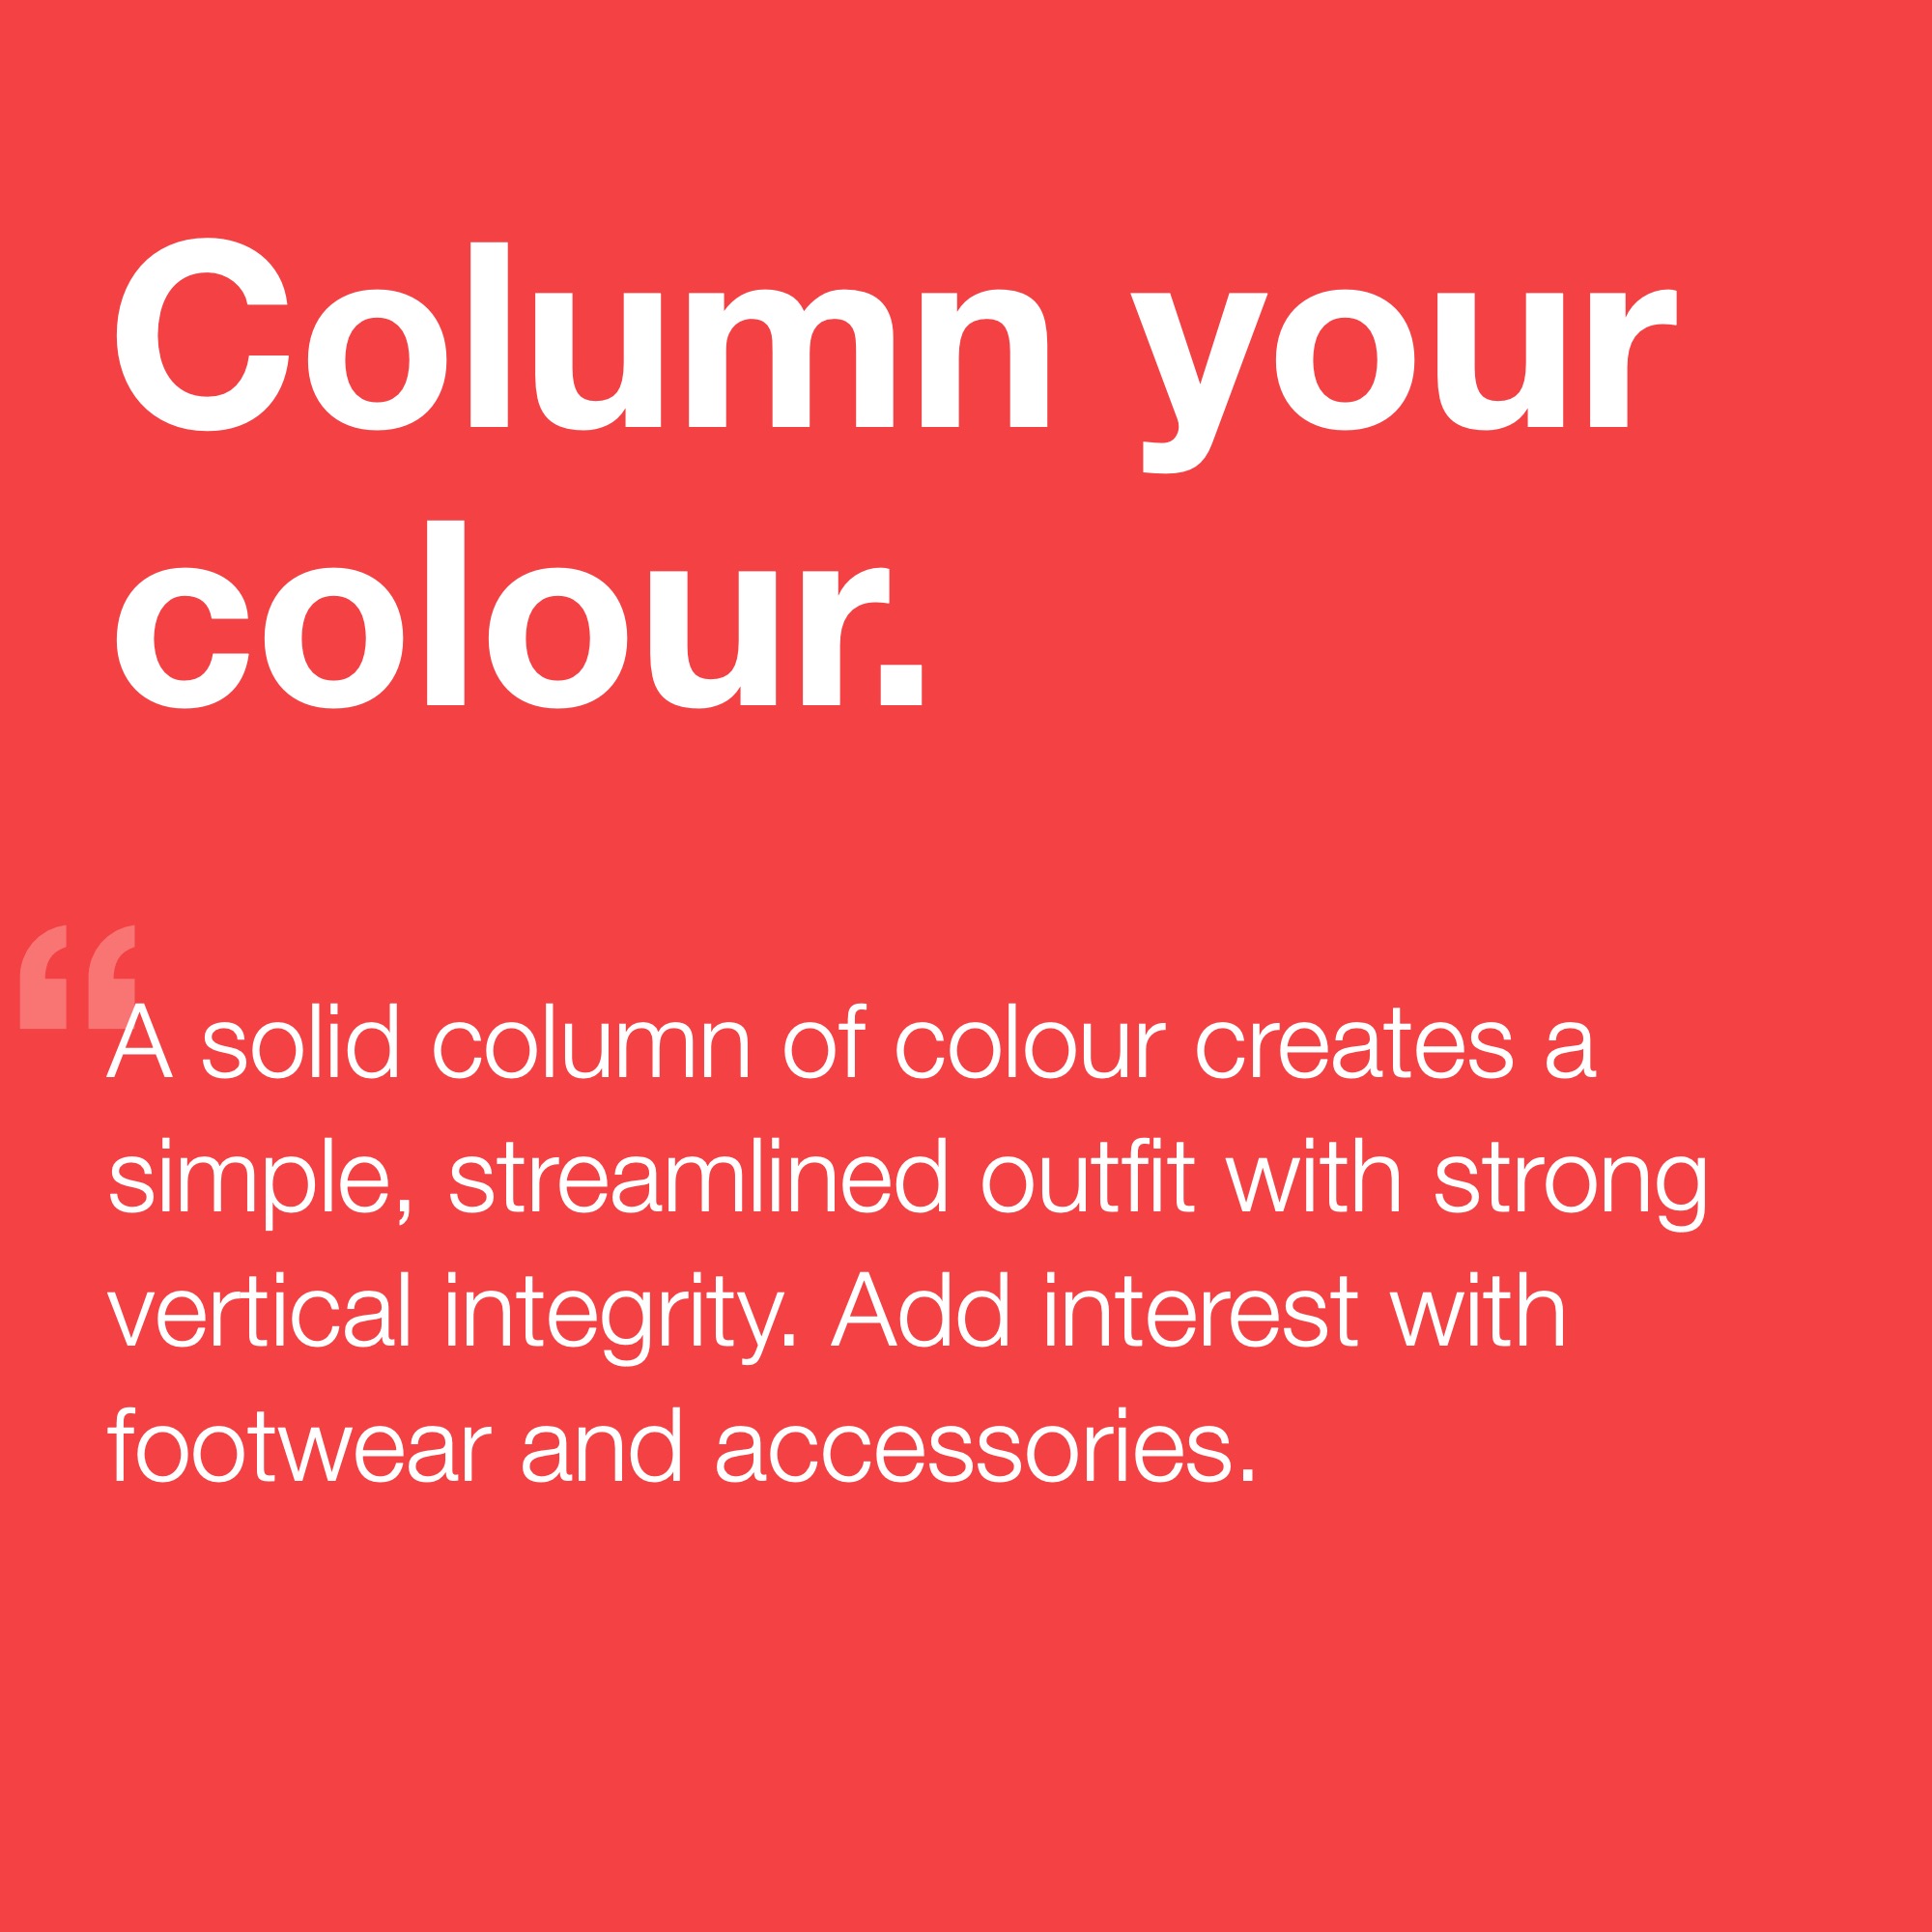 Column Your Colour